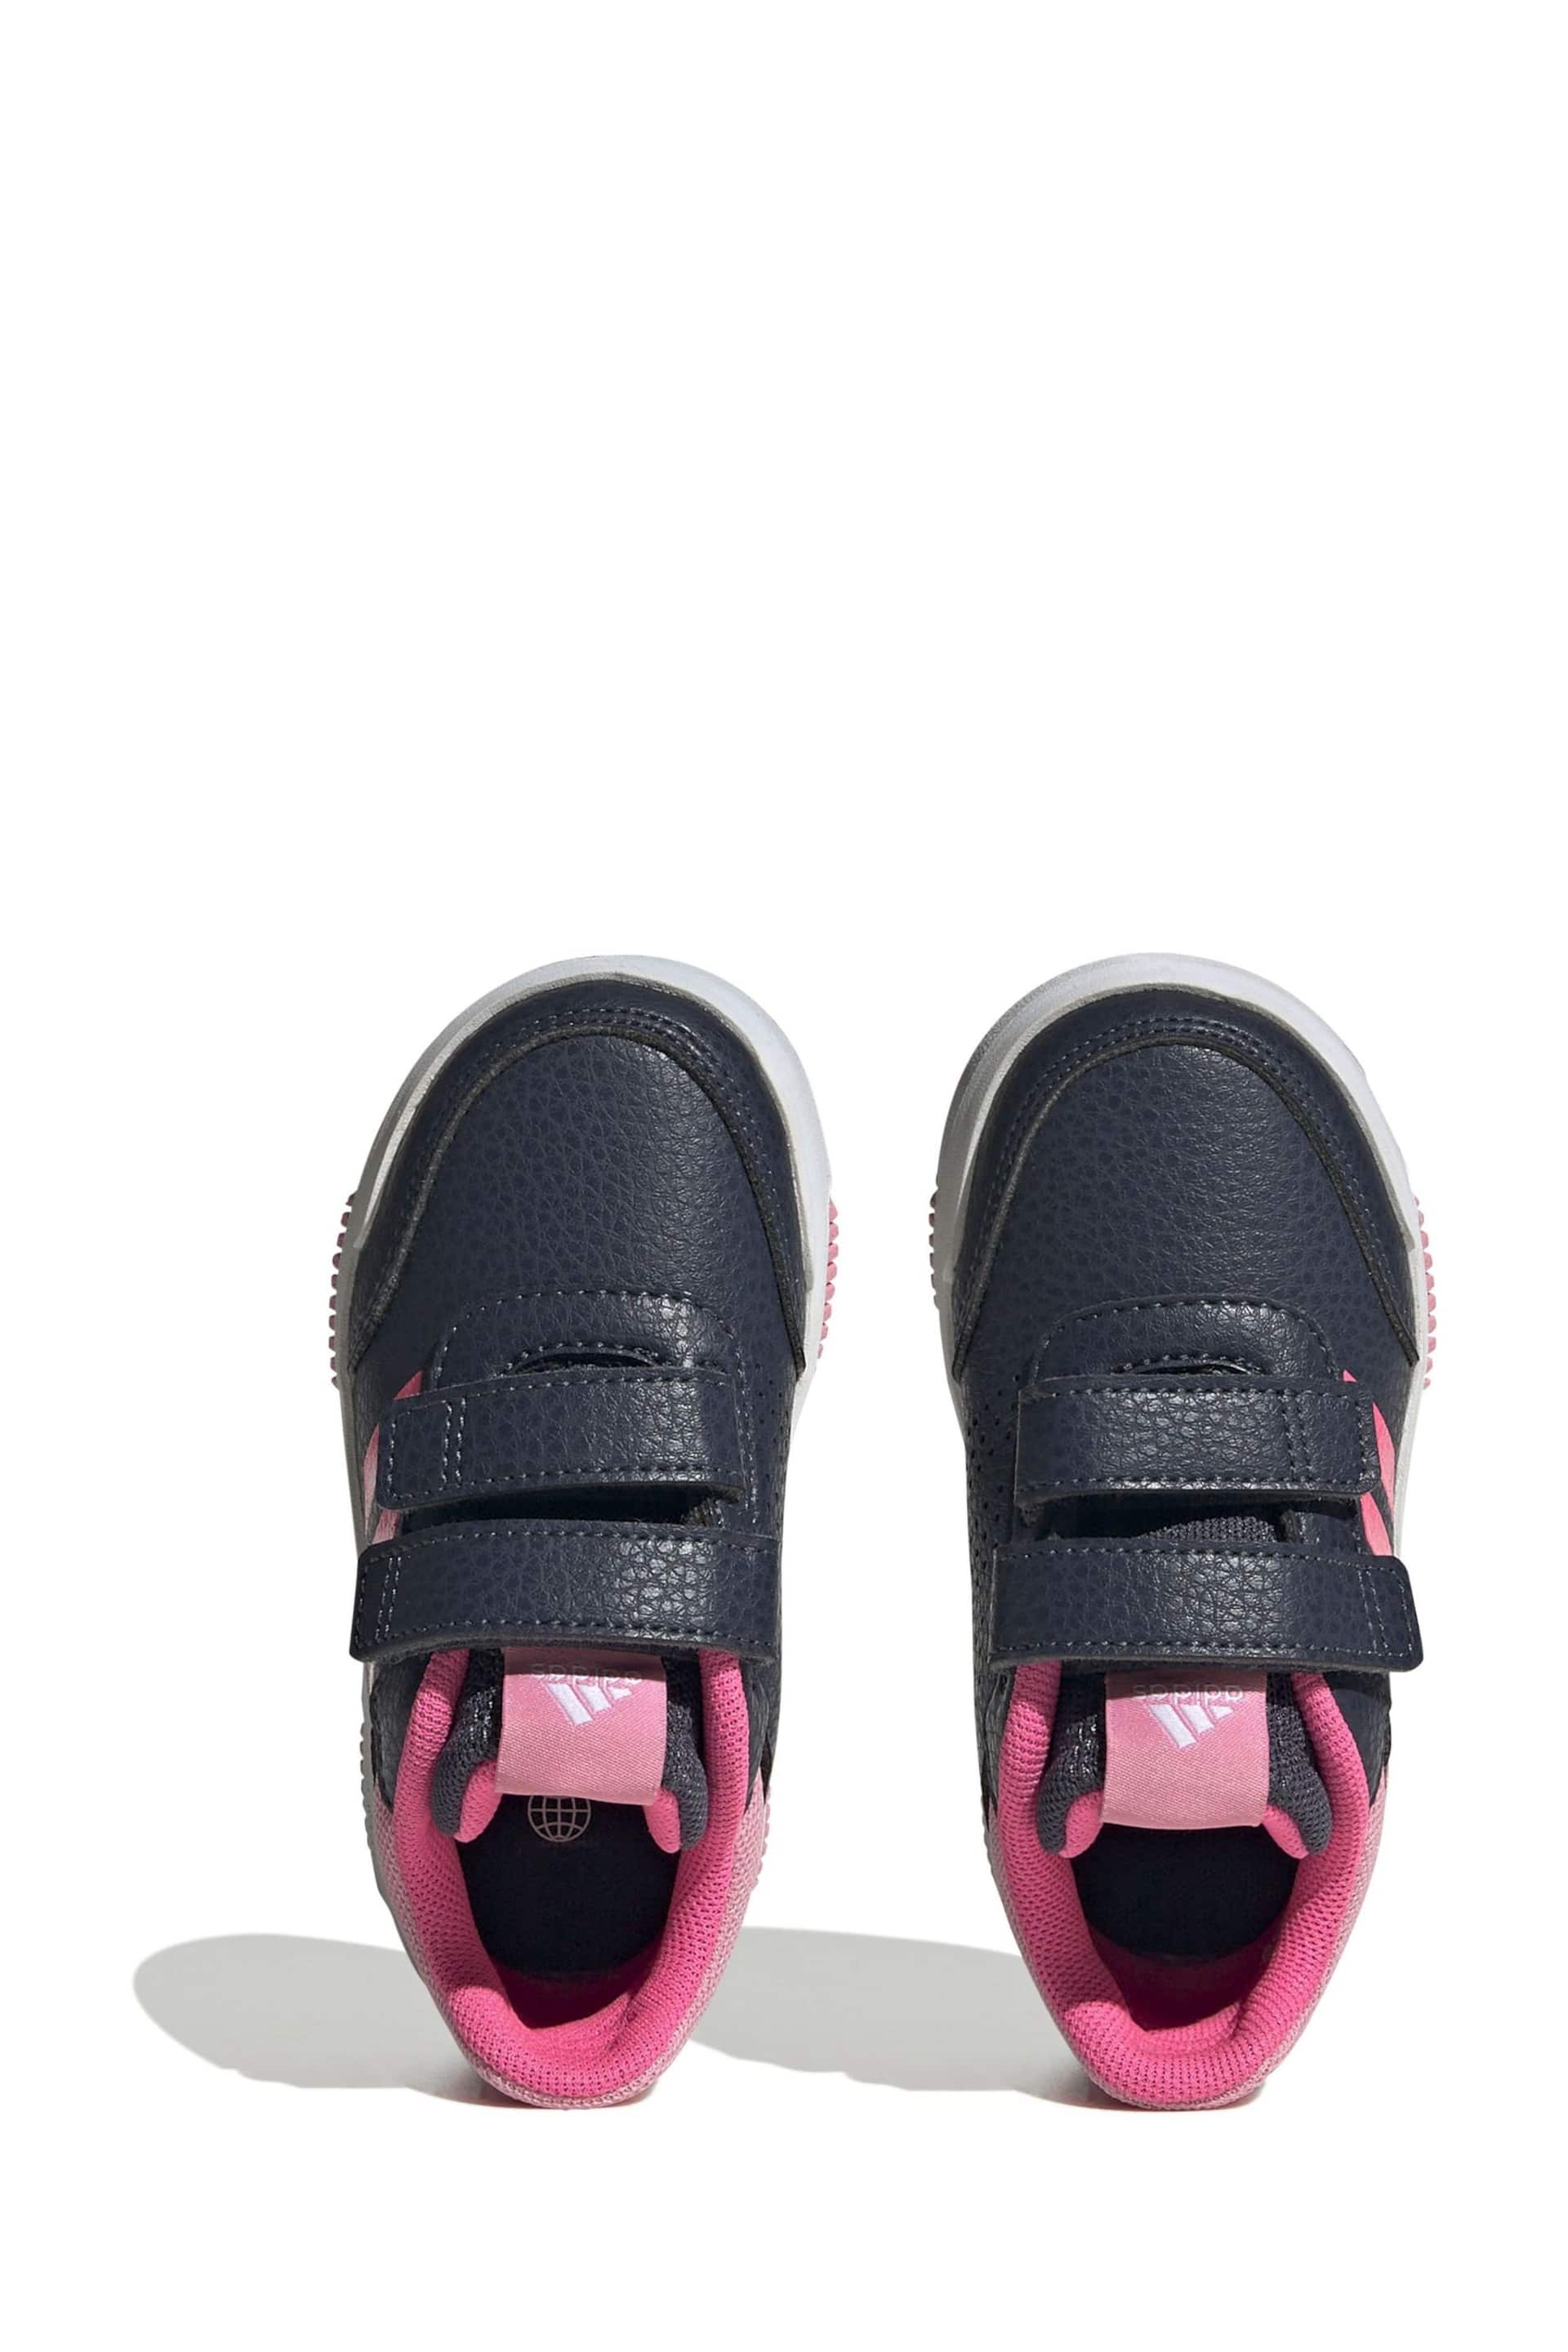 adidas Black/Pink Infant Tensaur Sport 2.0 I Trainers - Image 6 of 9